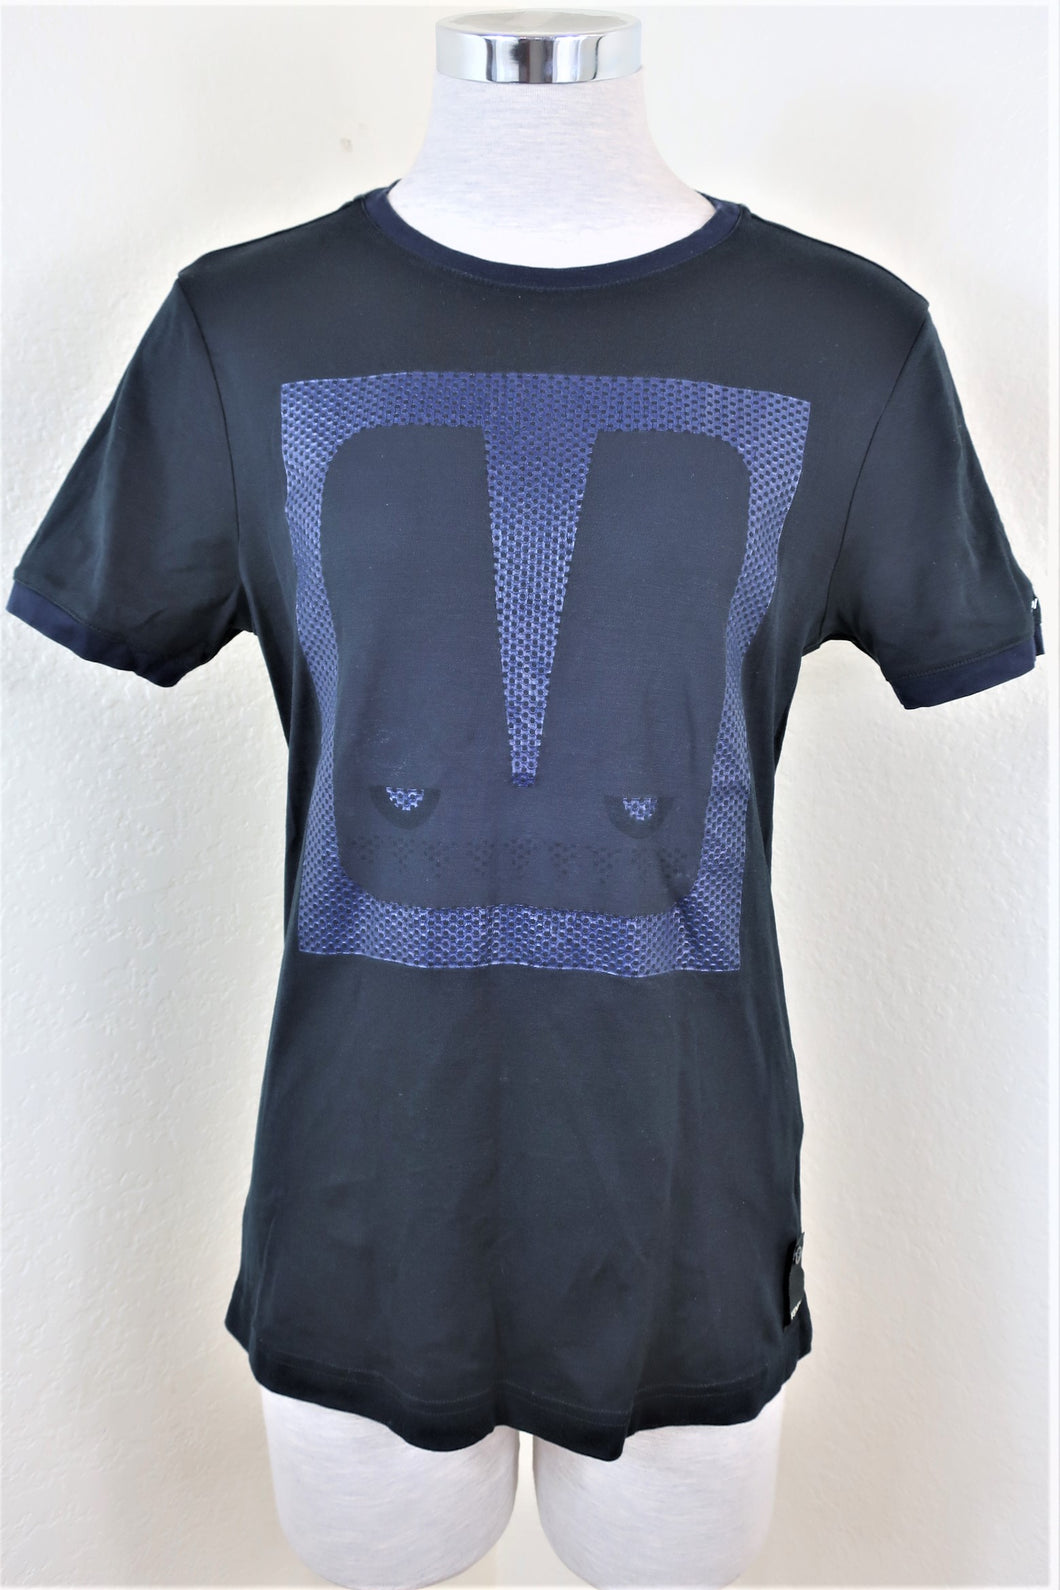 FENDI Black Robot Snake Eyes Tee Shirt T Shirt Top 46 Small 4 6 7